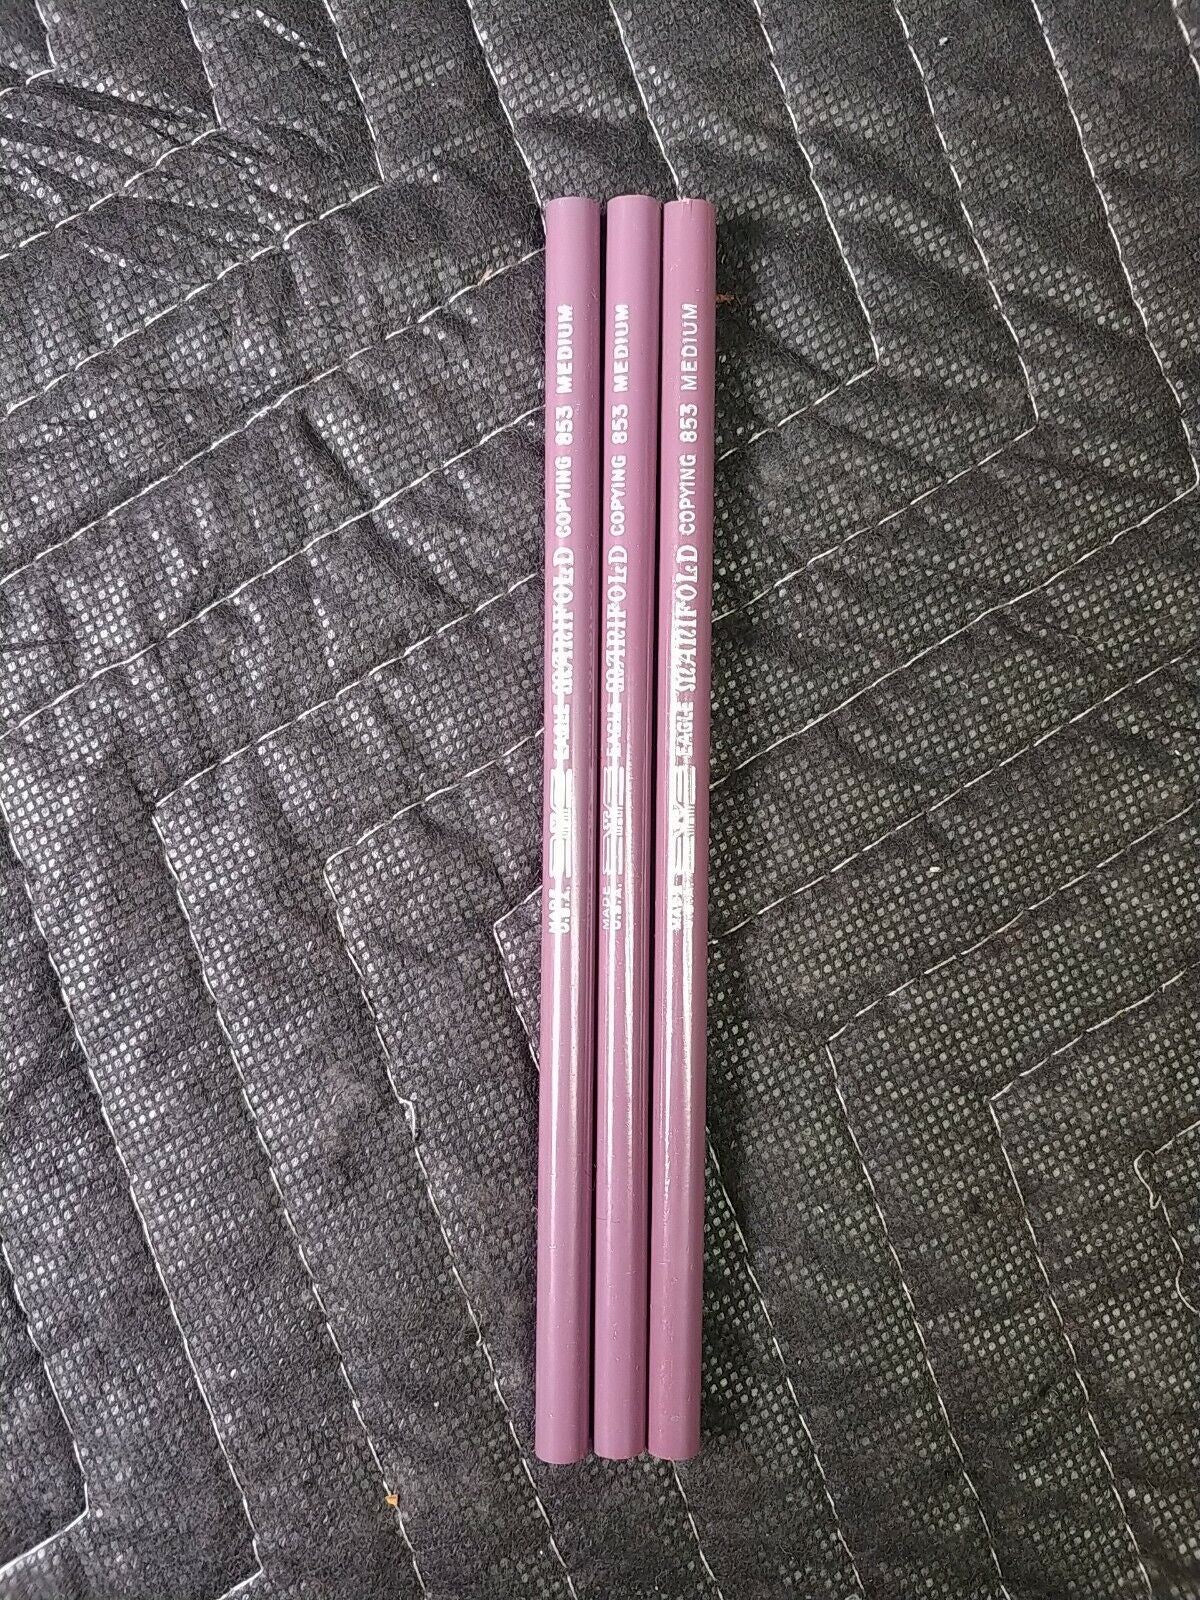 Rare! Eagle Pencil Co No. 853 Manifold Copying Pencils Medium Grade (33 total)